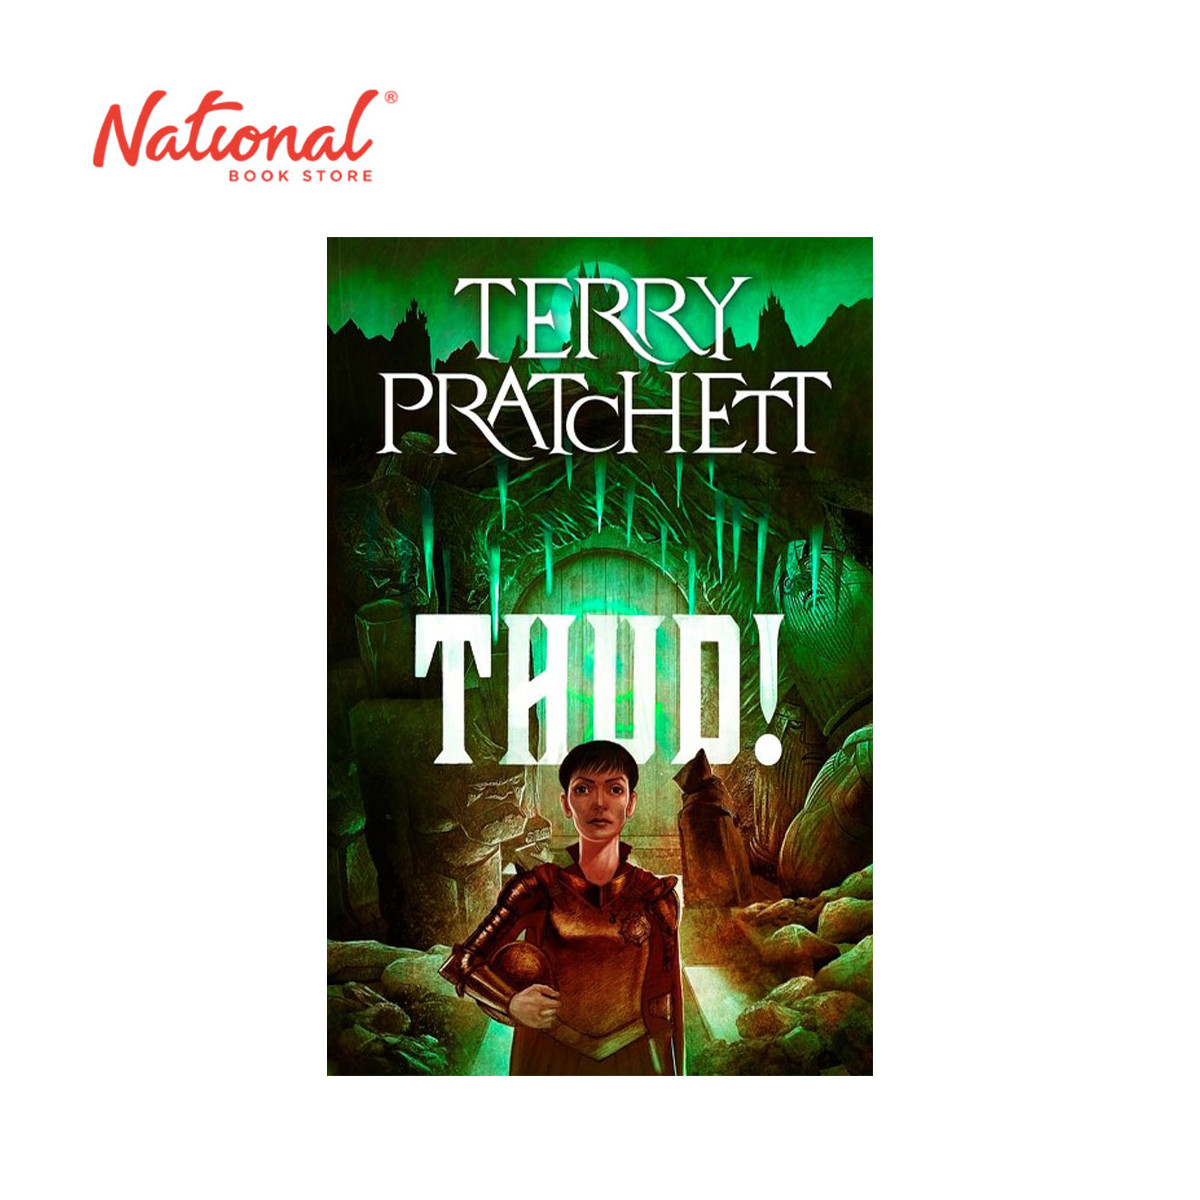 *PRE-ORDER* Thud! by Terry Pratchett - Trade Paperback - Sci-Fi, Fantasy & Horror